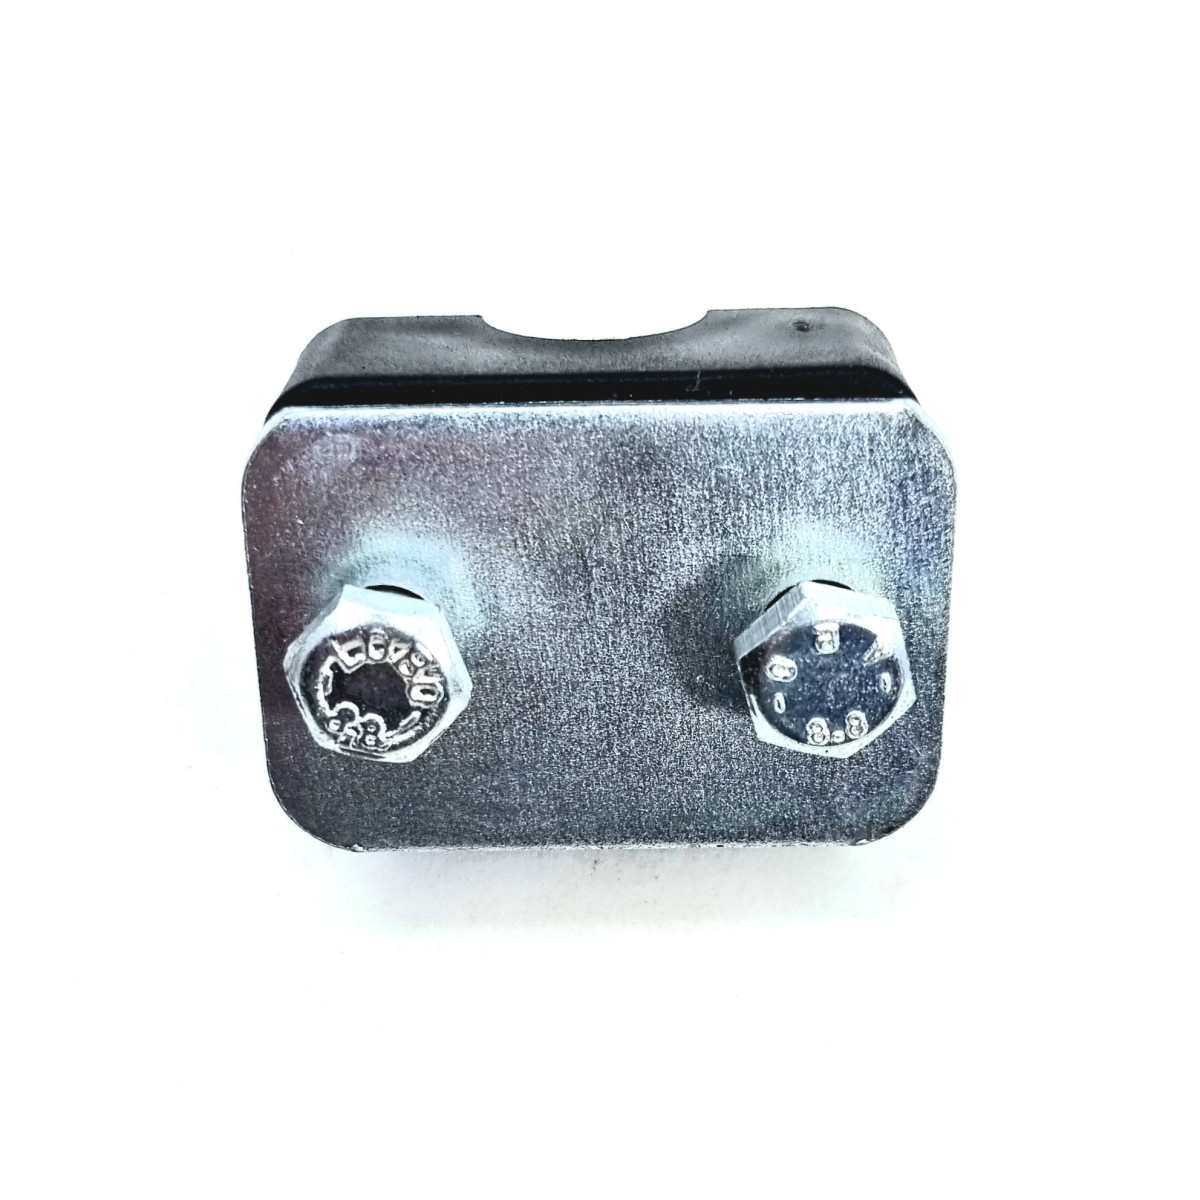 Collier de serrage simple ou double en inox 316 : vente en ligne de colliers  de serrage en inox